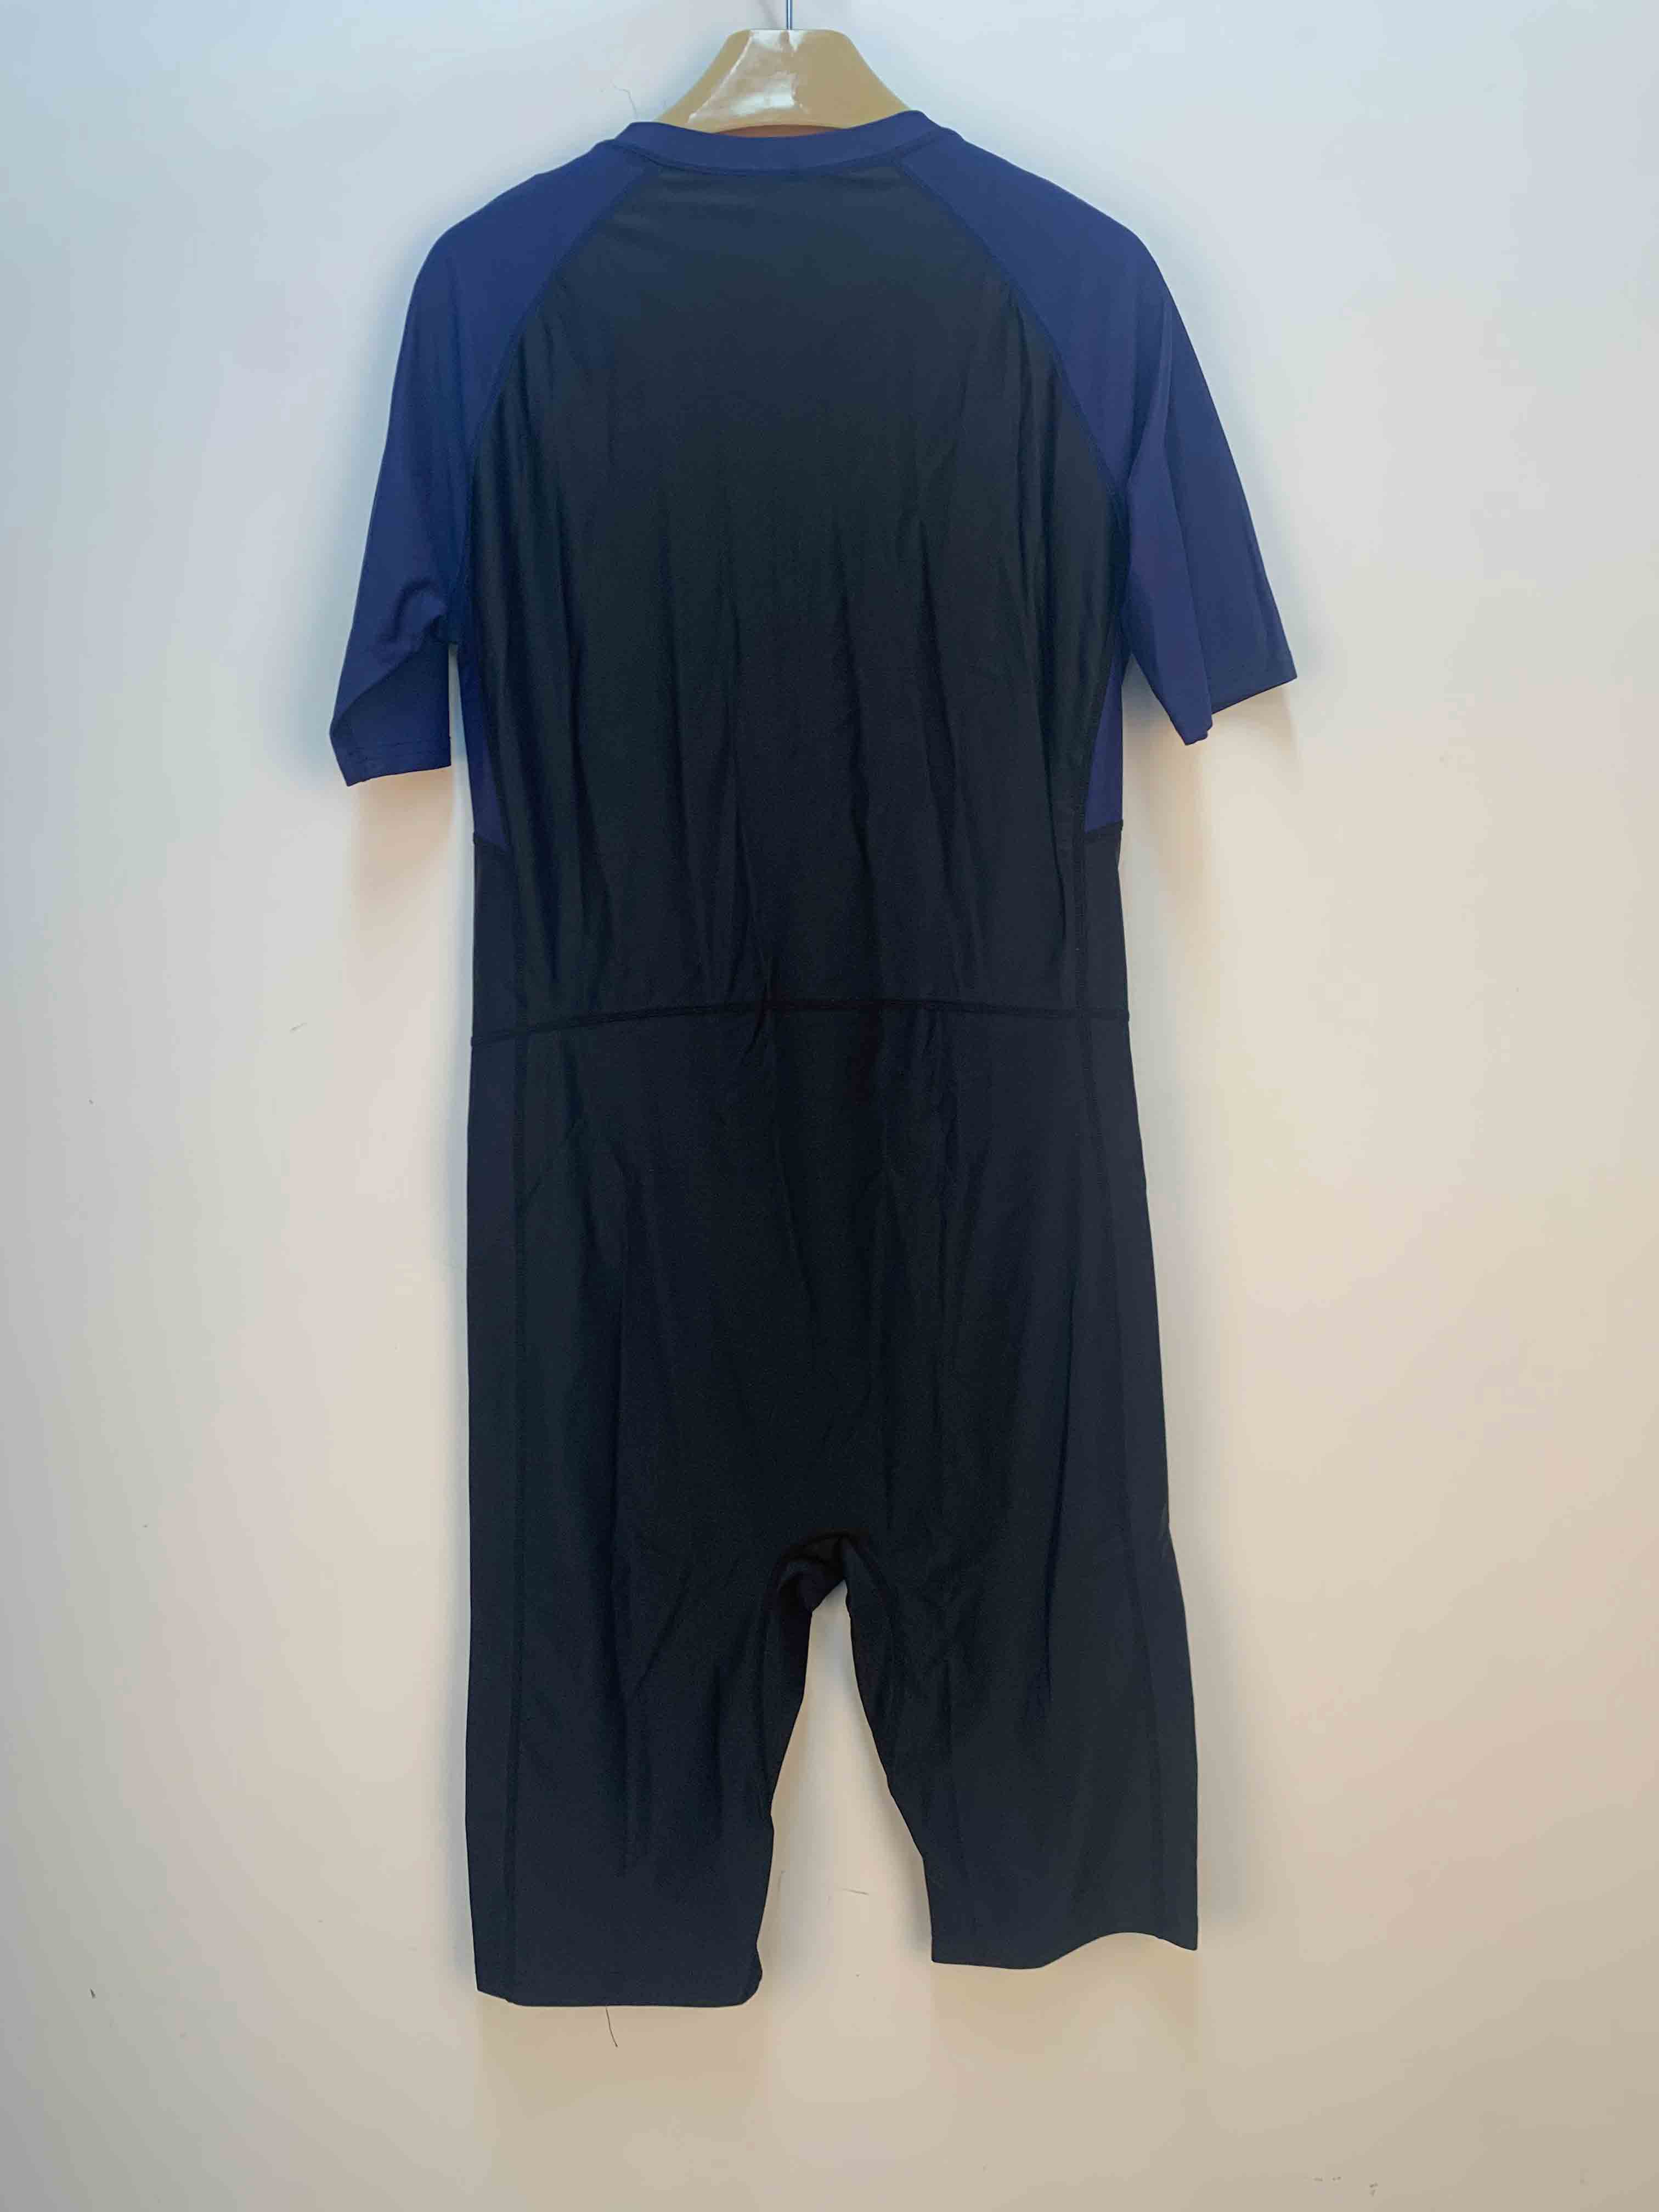 Zealife Short Sleeve Wetsuit